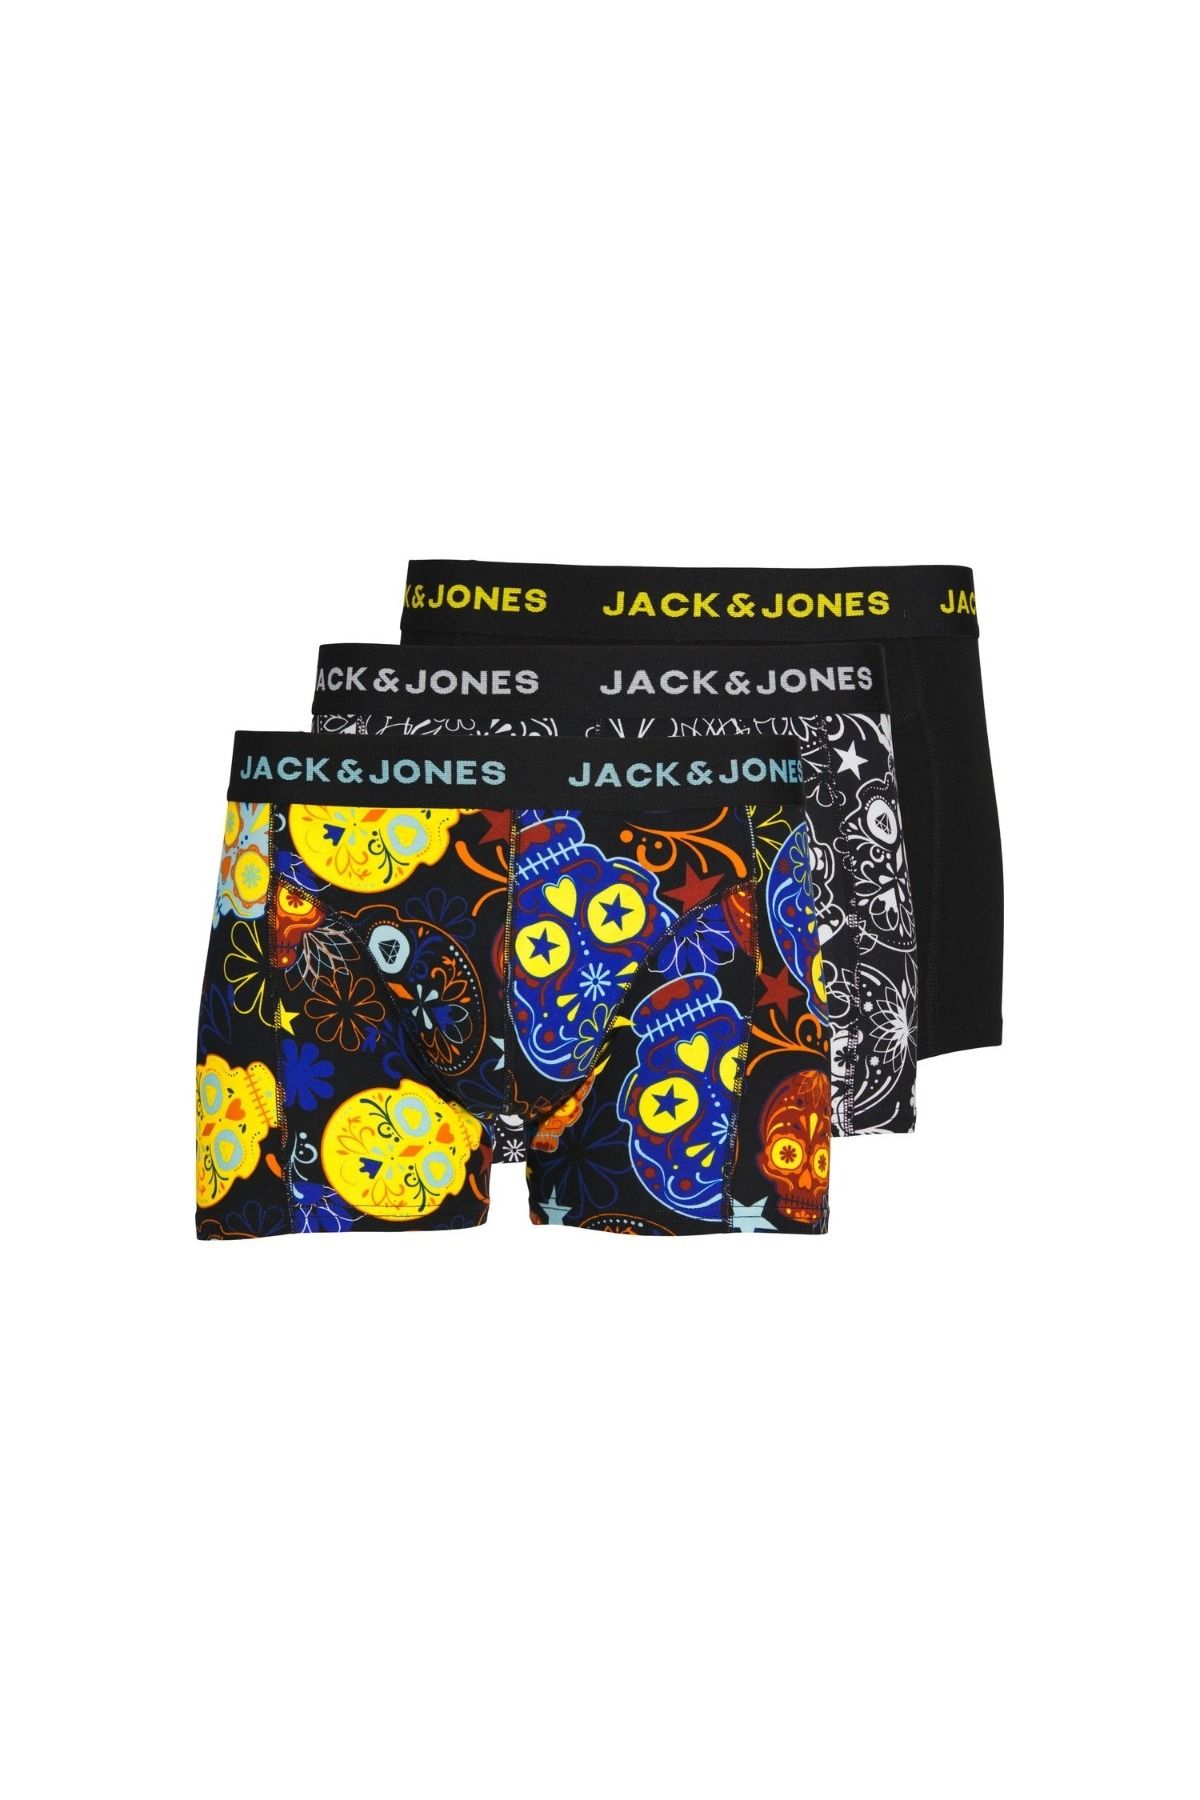 Jack & Jones Jack&Jones Skull 3 Pack Erkek Siyah Boxer